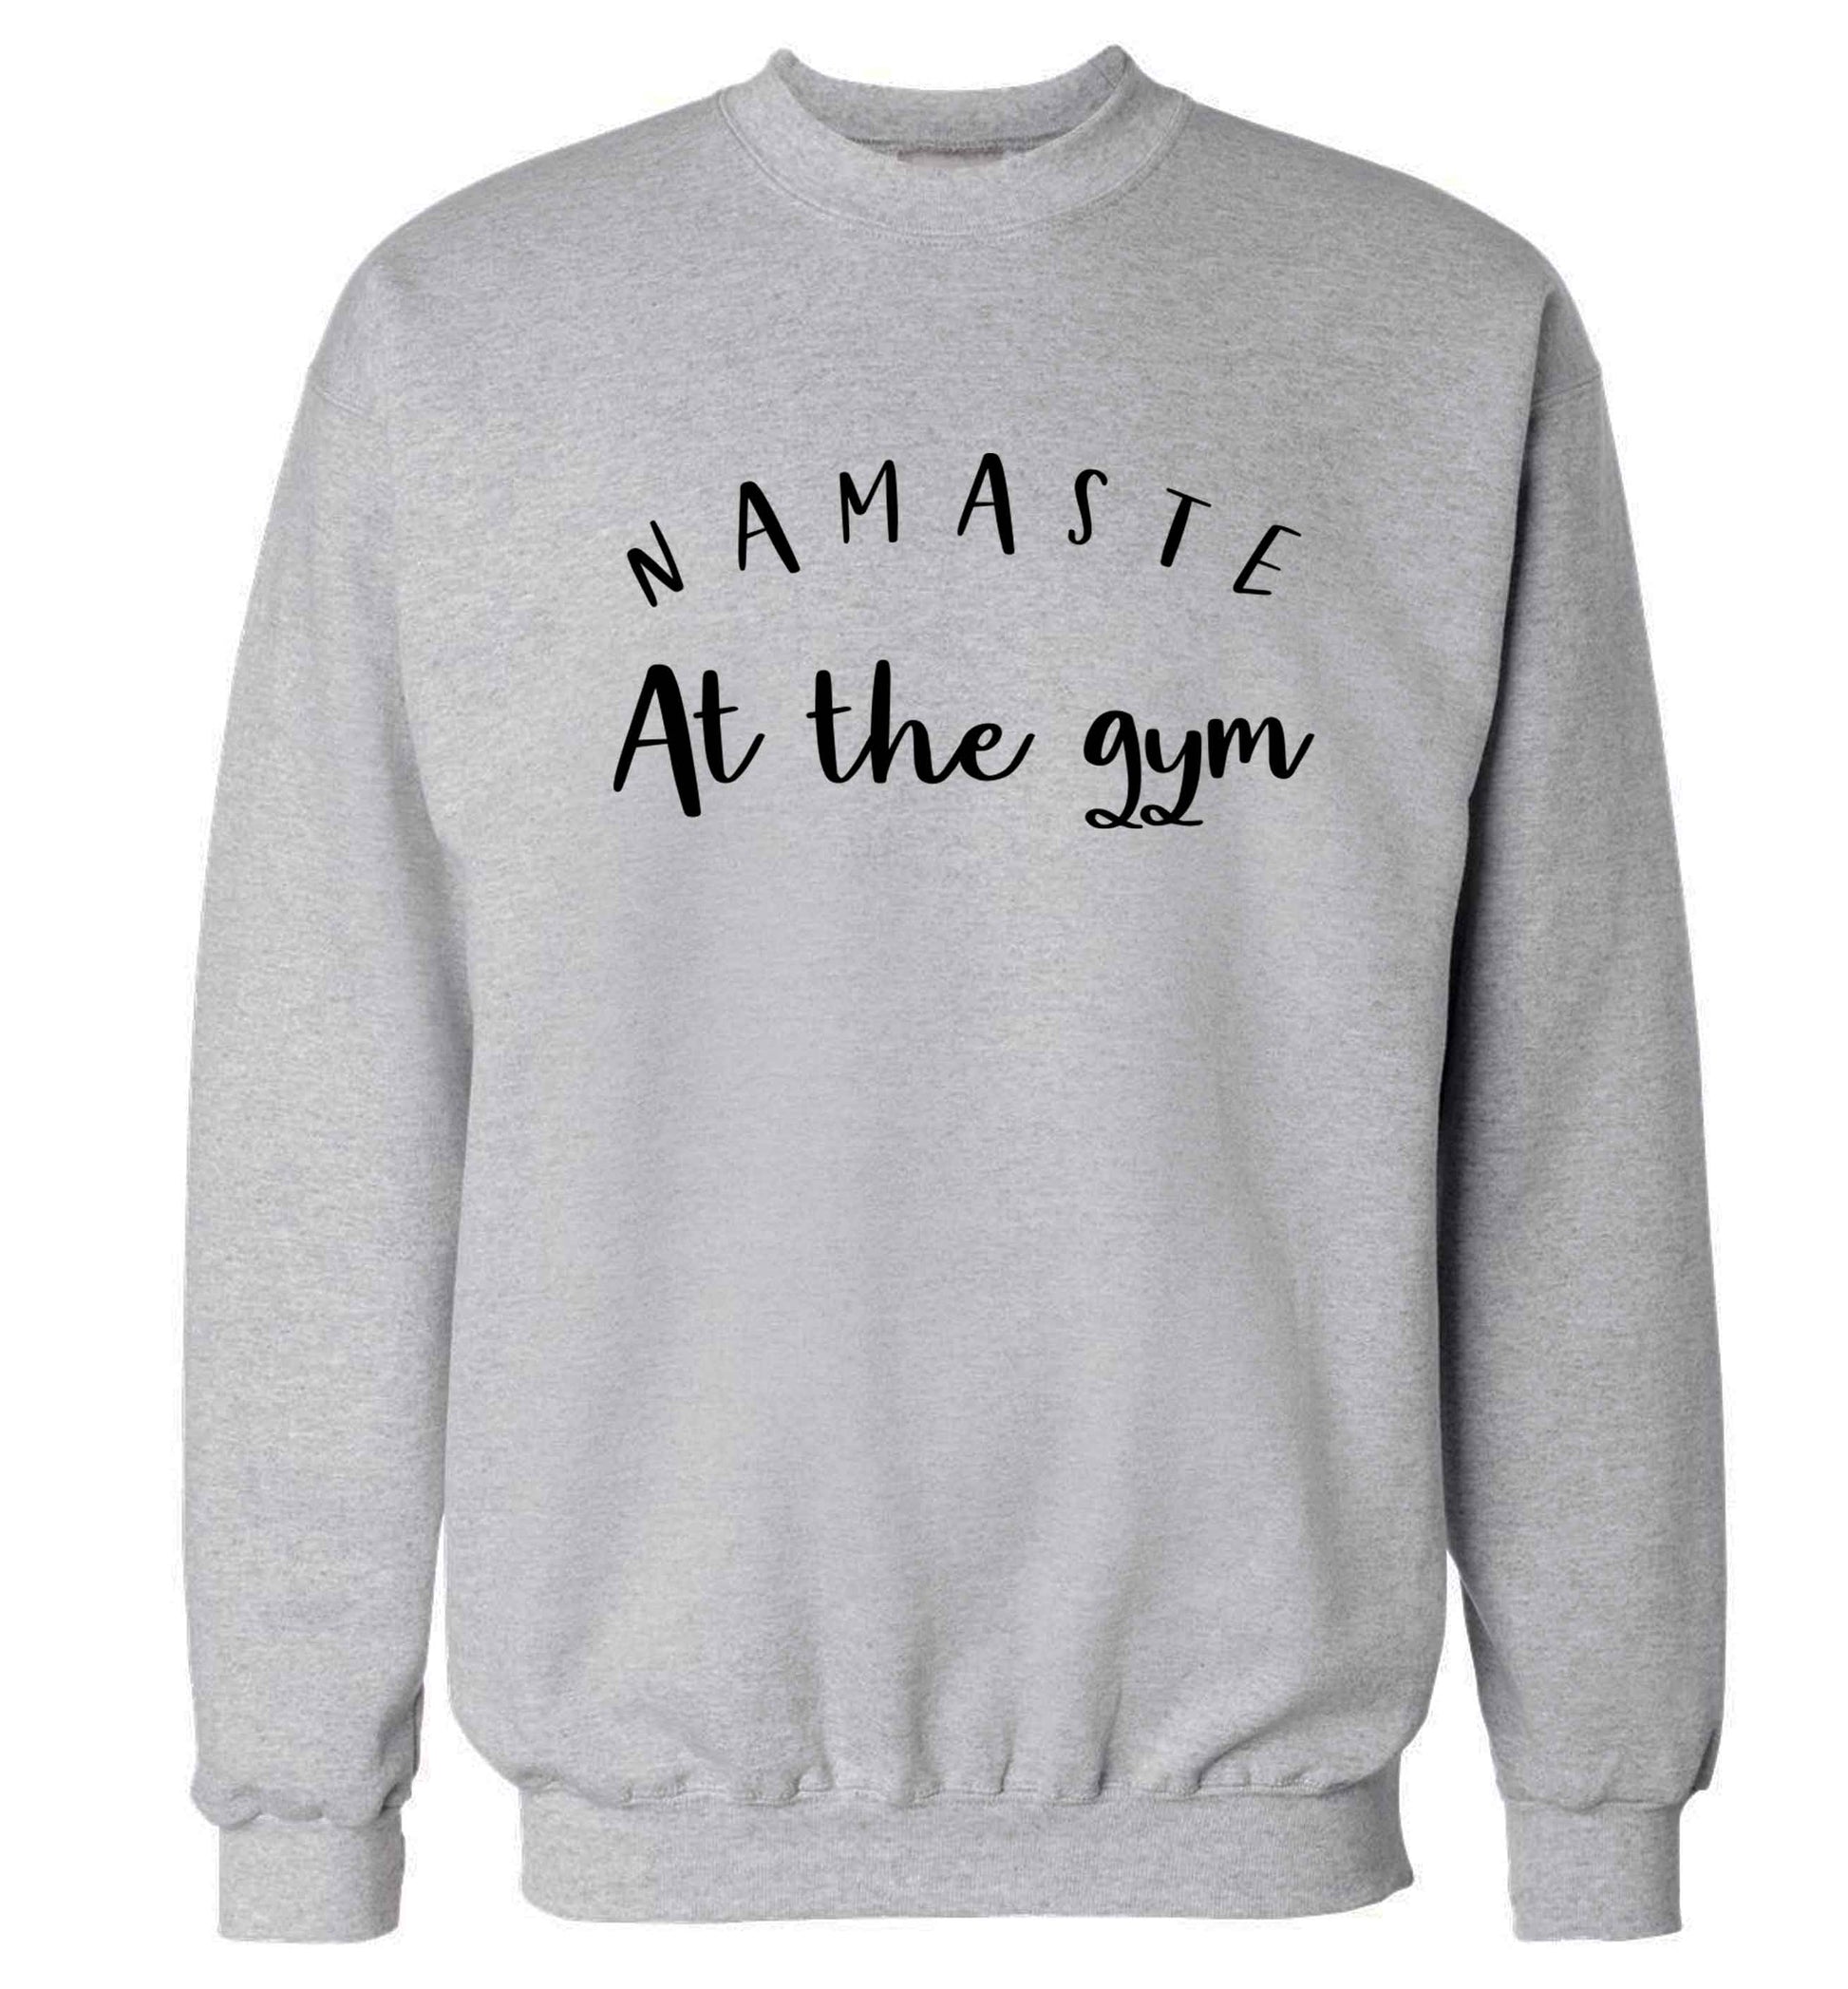 Namaste at the gym Adult's unisex grey Sweater 2XL